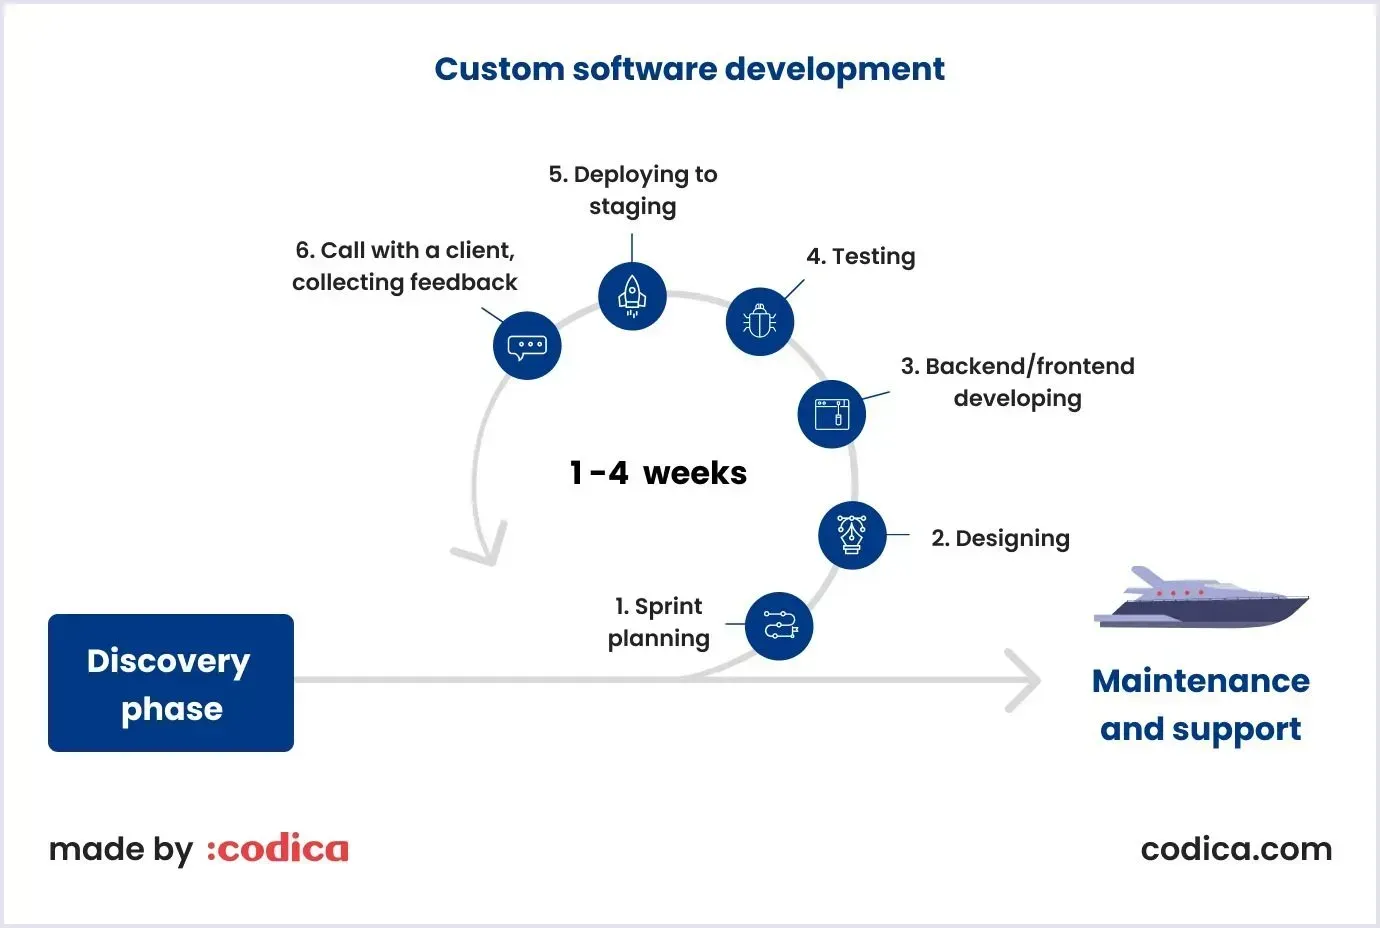 Codica custom software development lifecycle